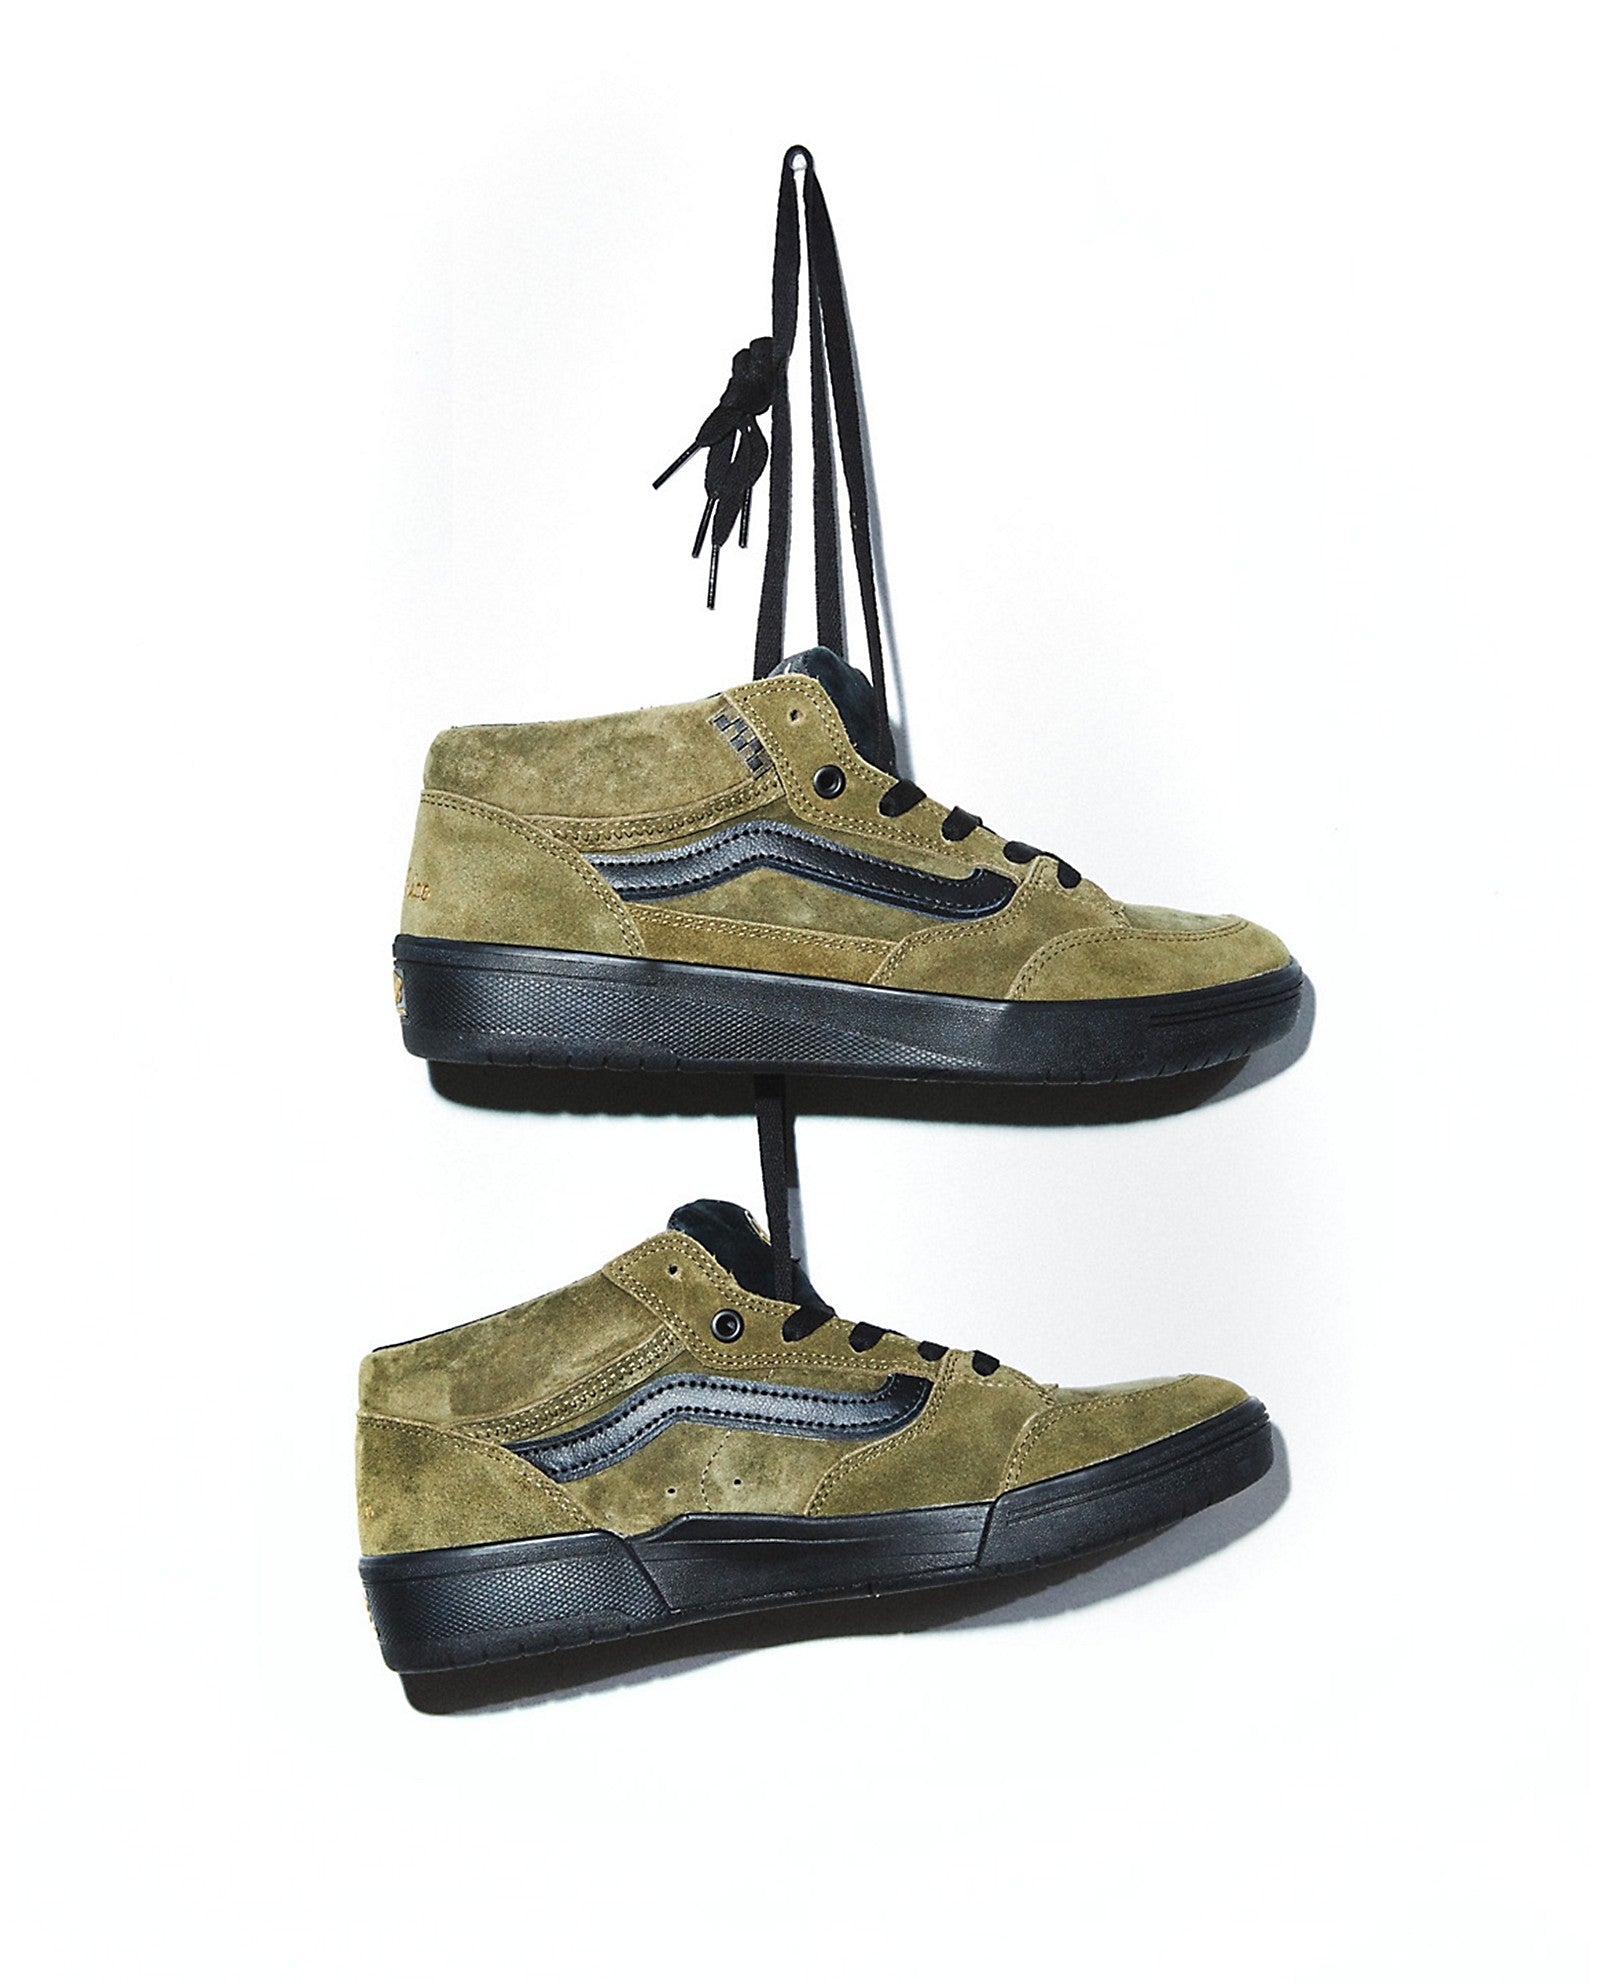 Vans Zahba Mid x Beatrice Domond Shoes  - UNLTD Boardshop